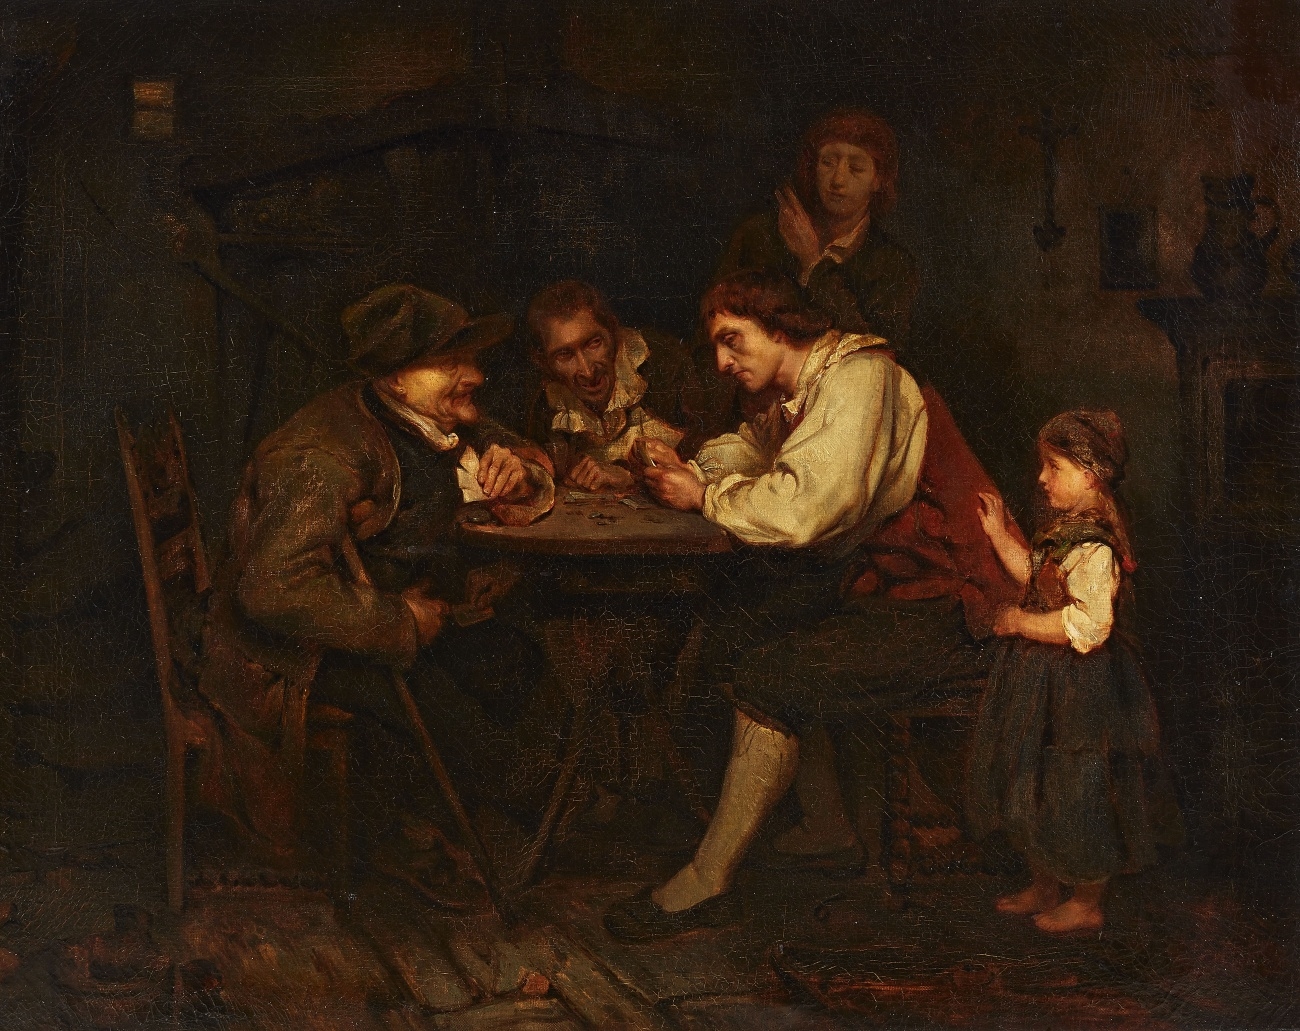 The Gambler by Ludwig Knaus